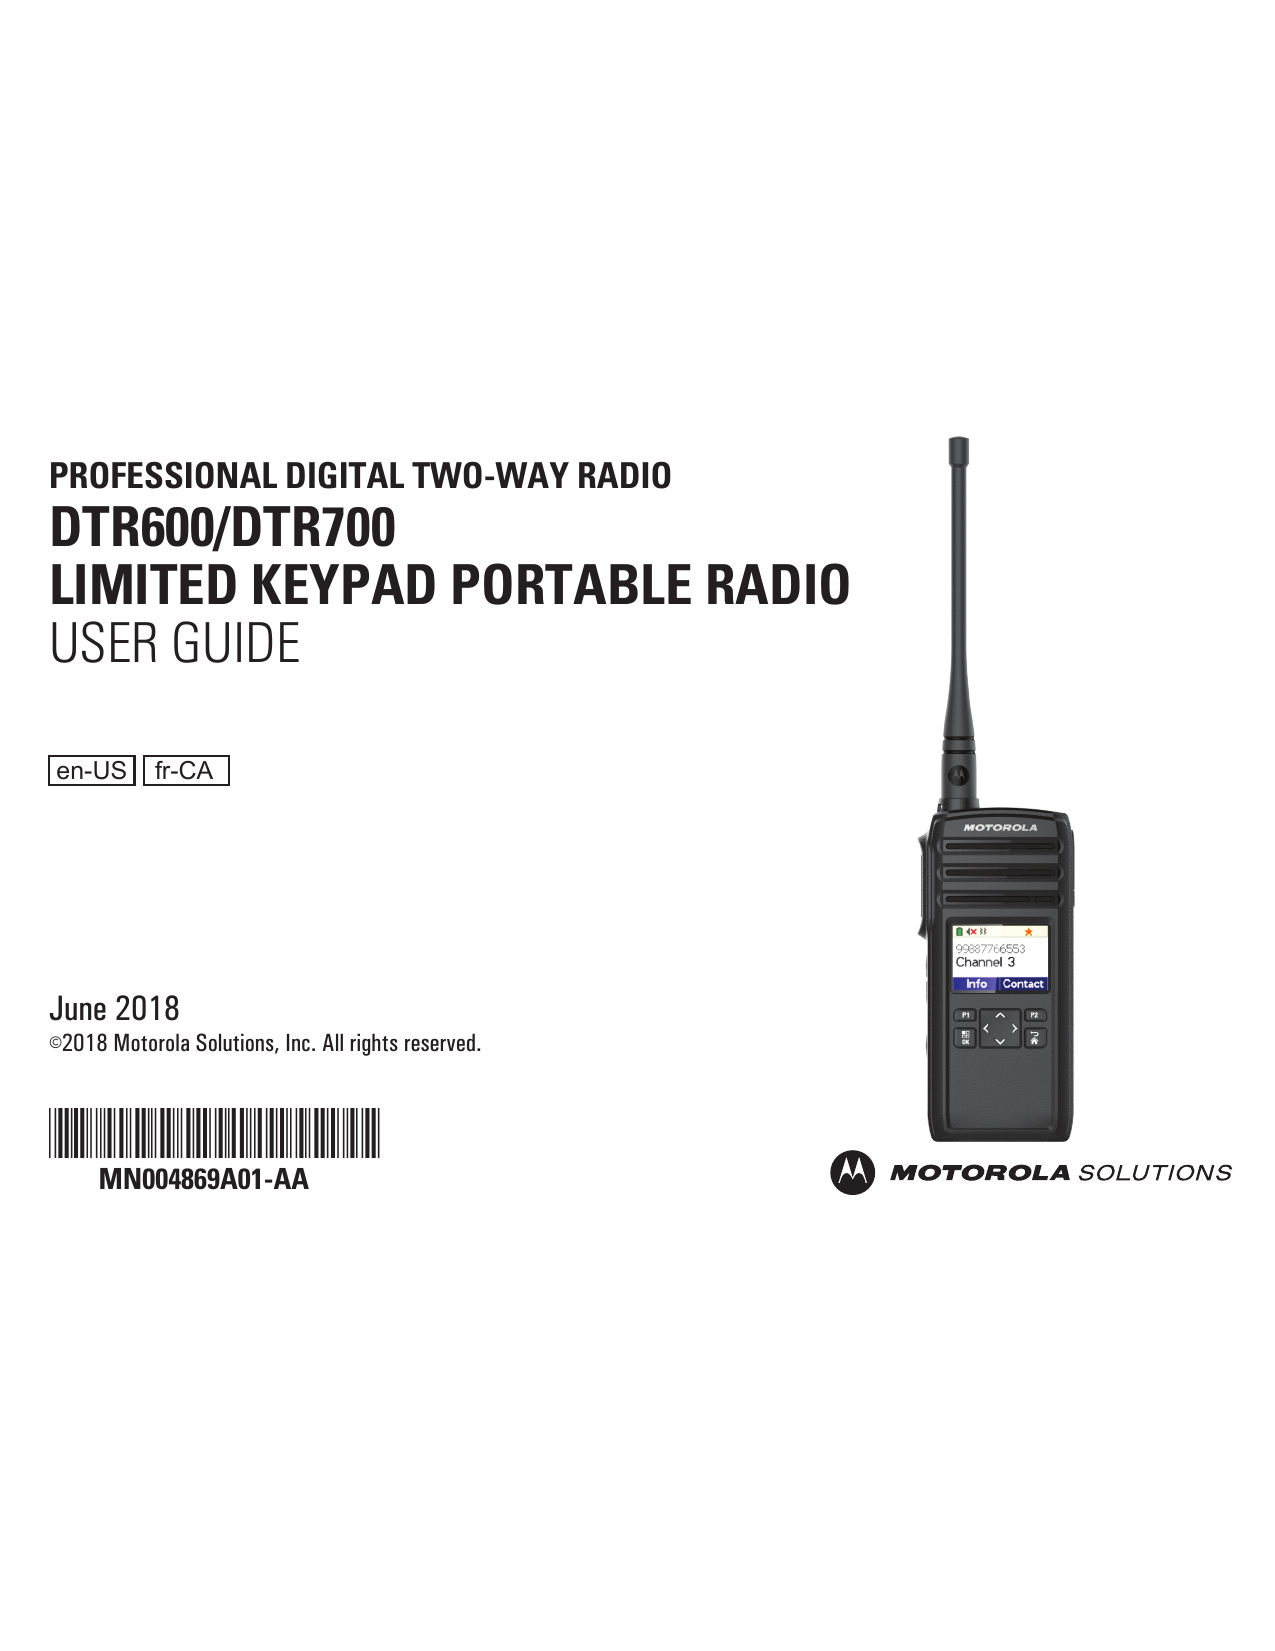 DTR700 Digital Two Way Radio - Motorola Solutions